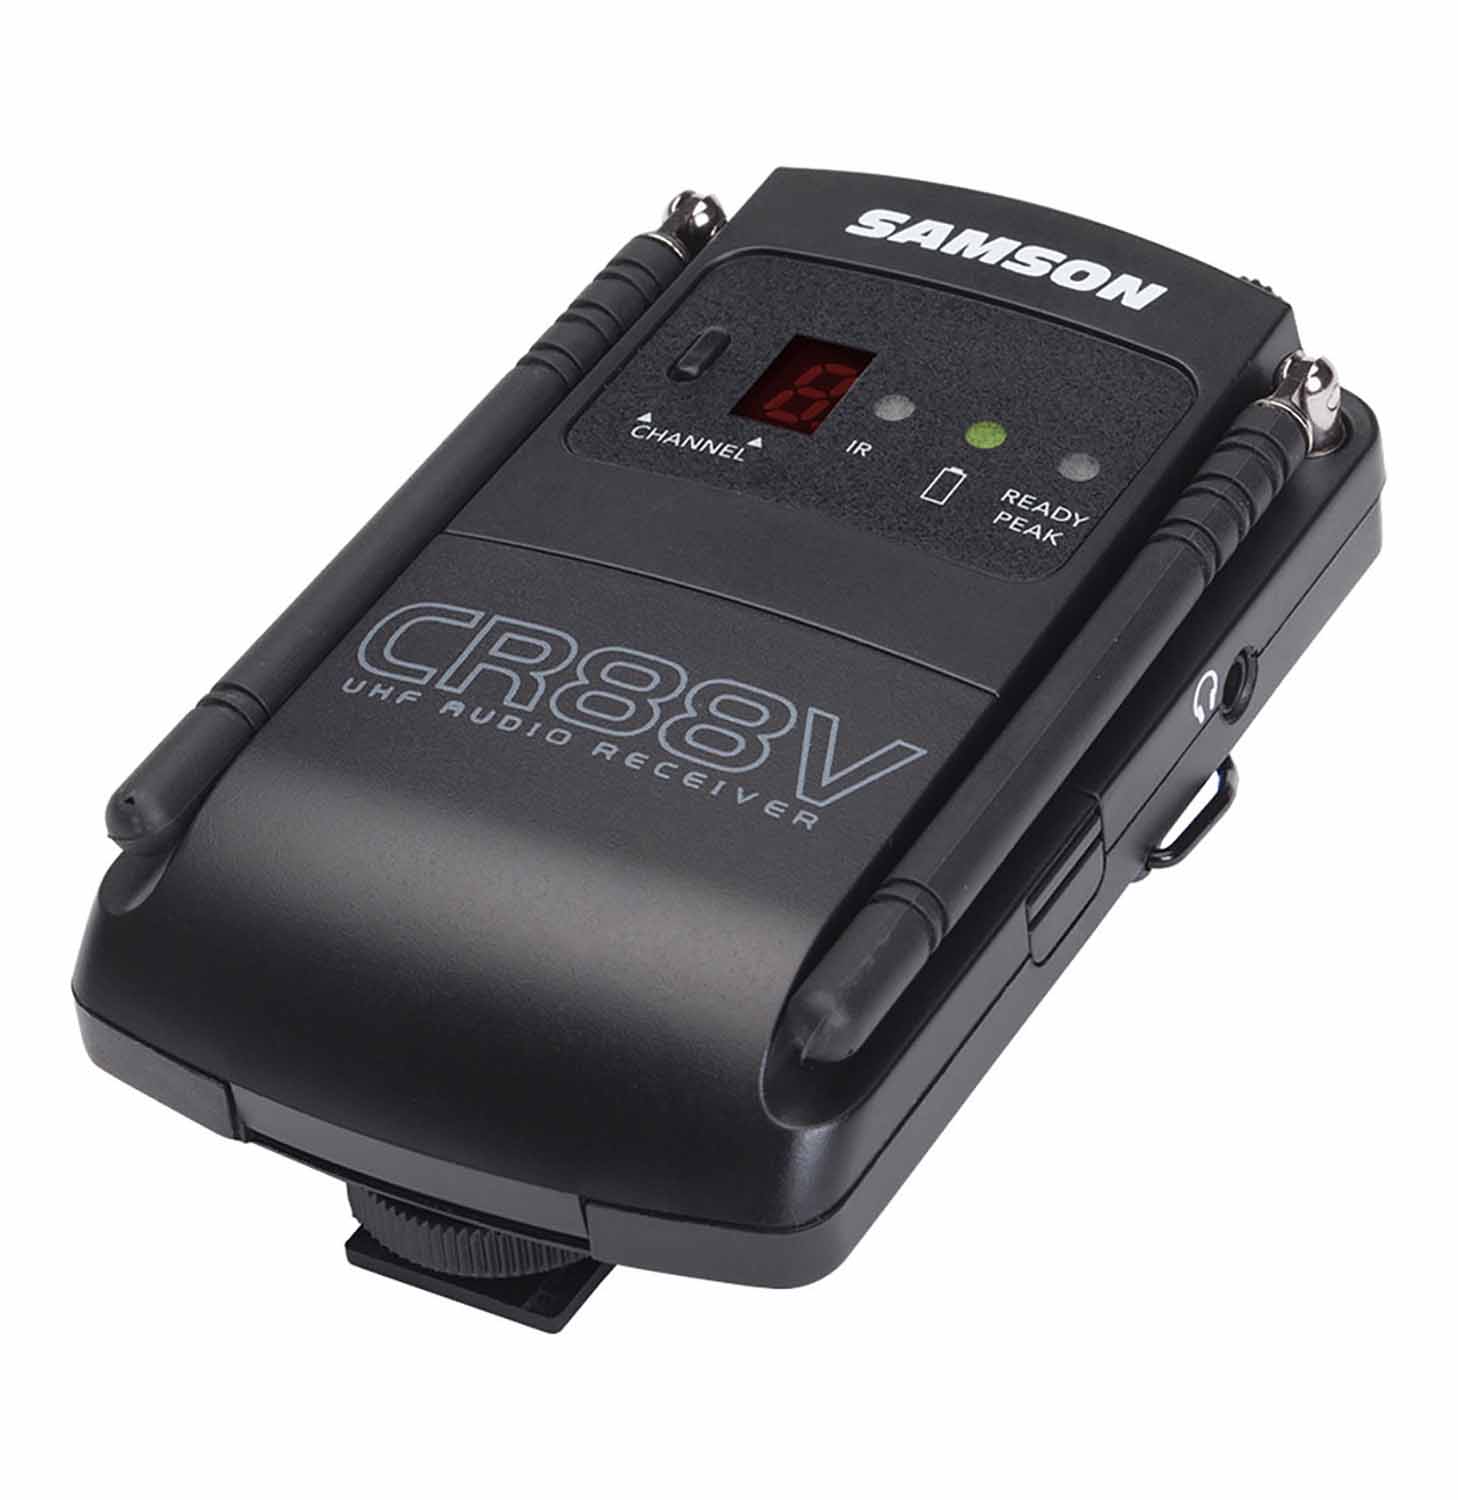 Samson SWC88XVR00-K, Concert 88XV V2 Micro Receiver with 110V Adapter - K Band - Hollywood DJ